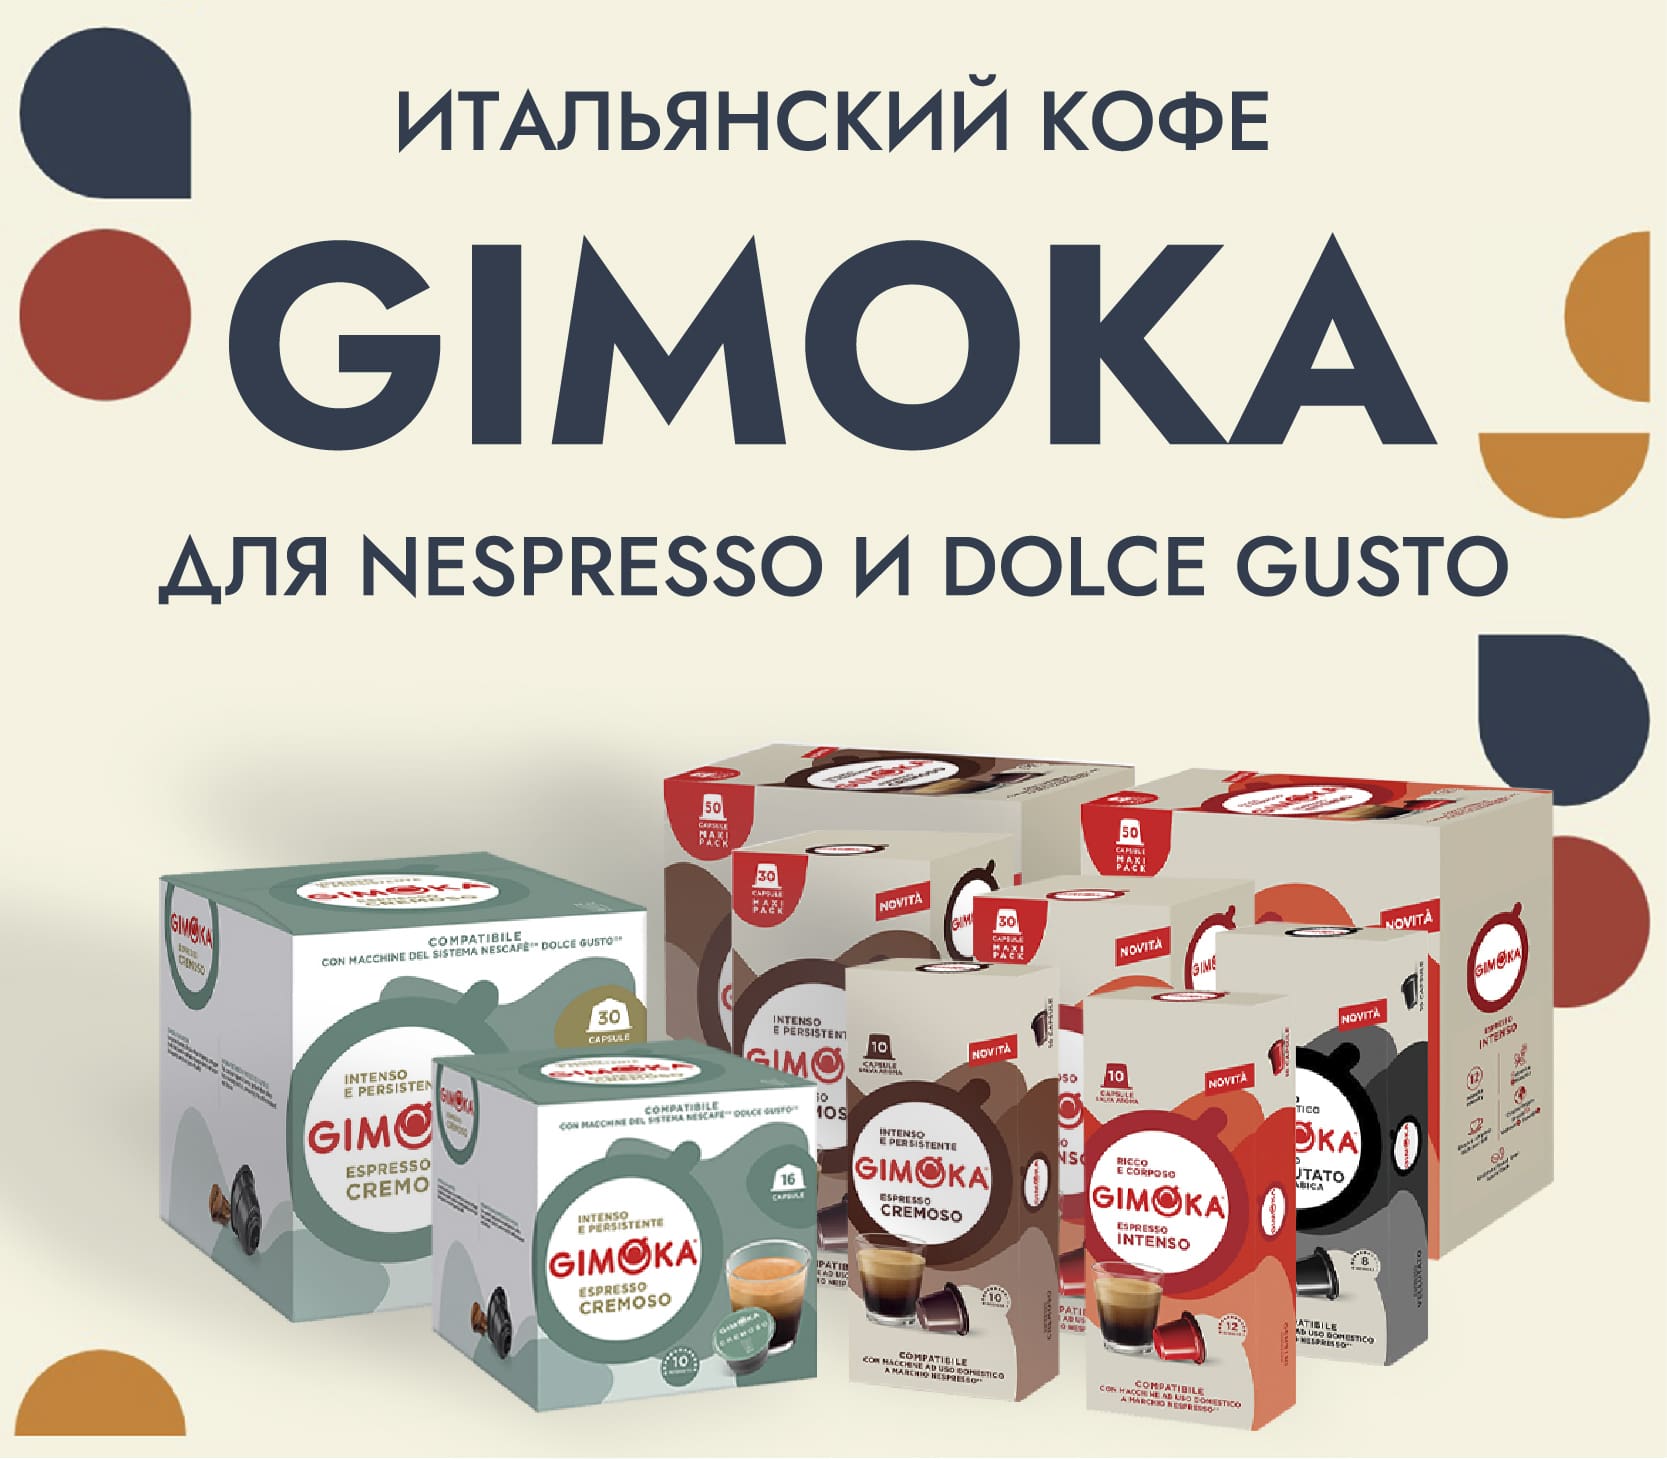 Gimoka new